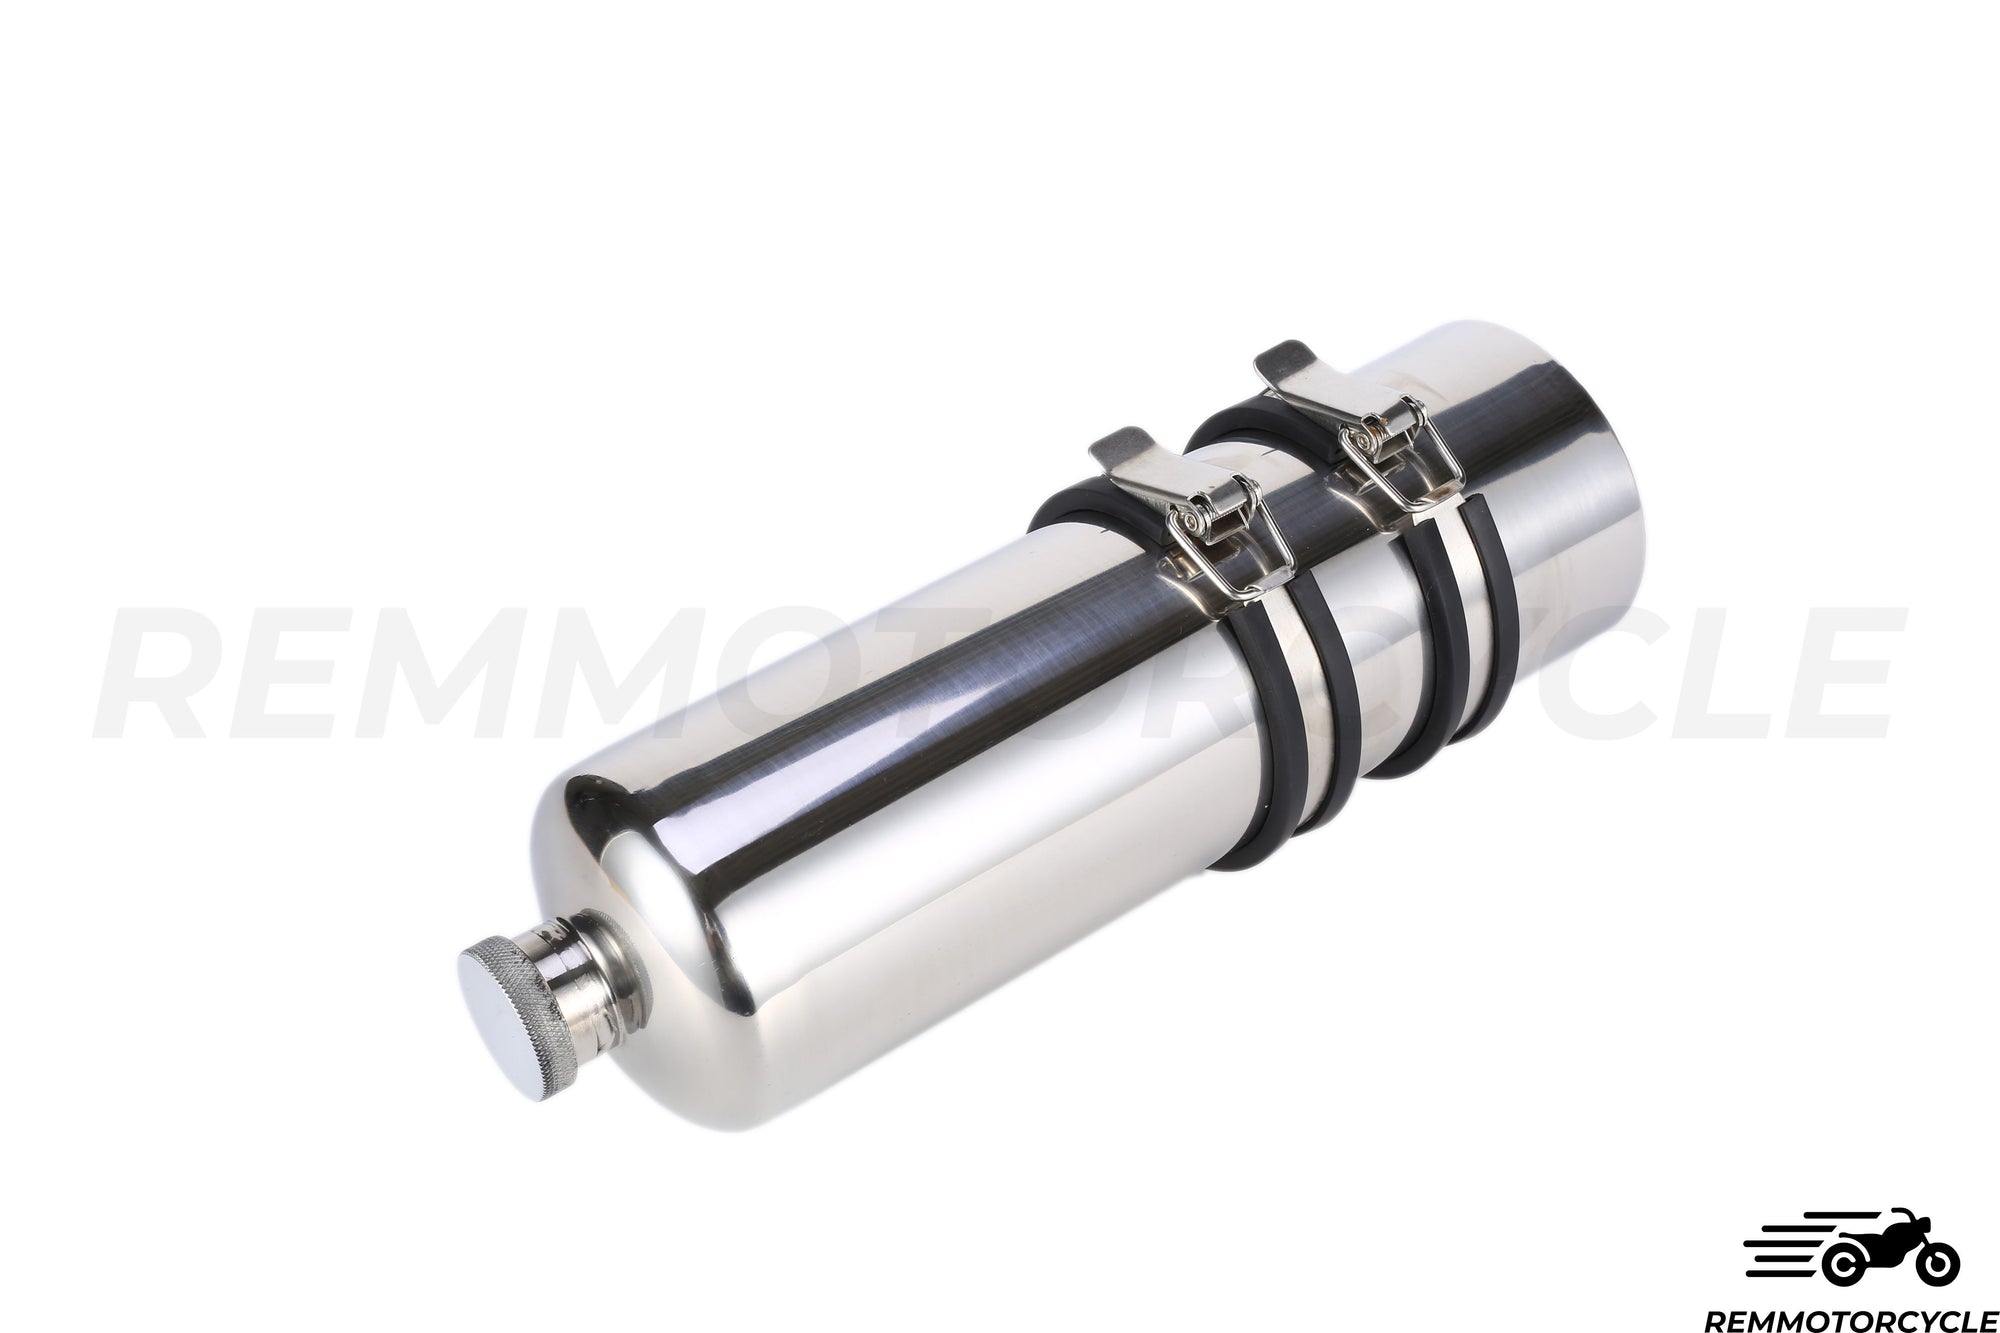 Botol jenis motor reservoir tambahan dalam tutup aluminium 1,5 L dengan dukungan